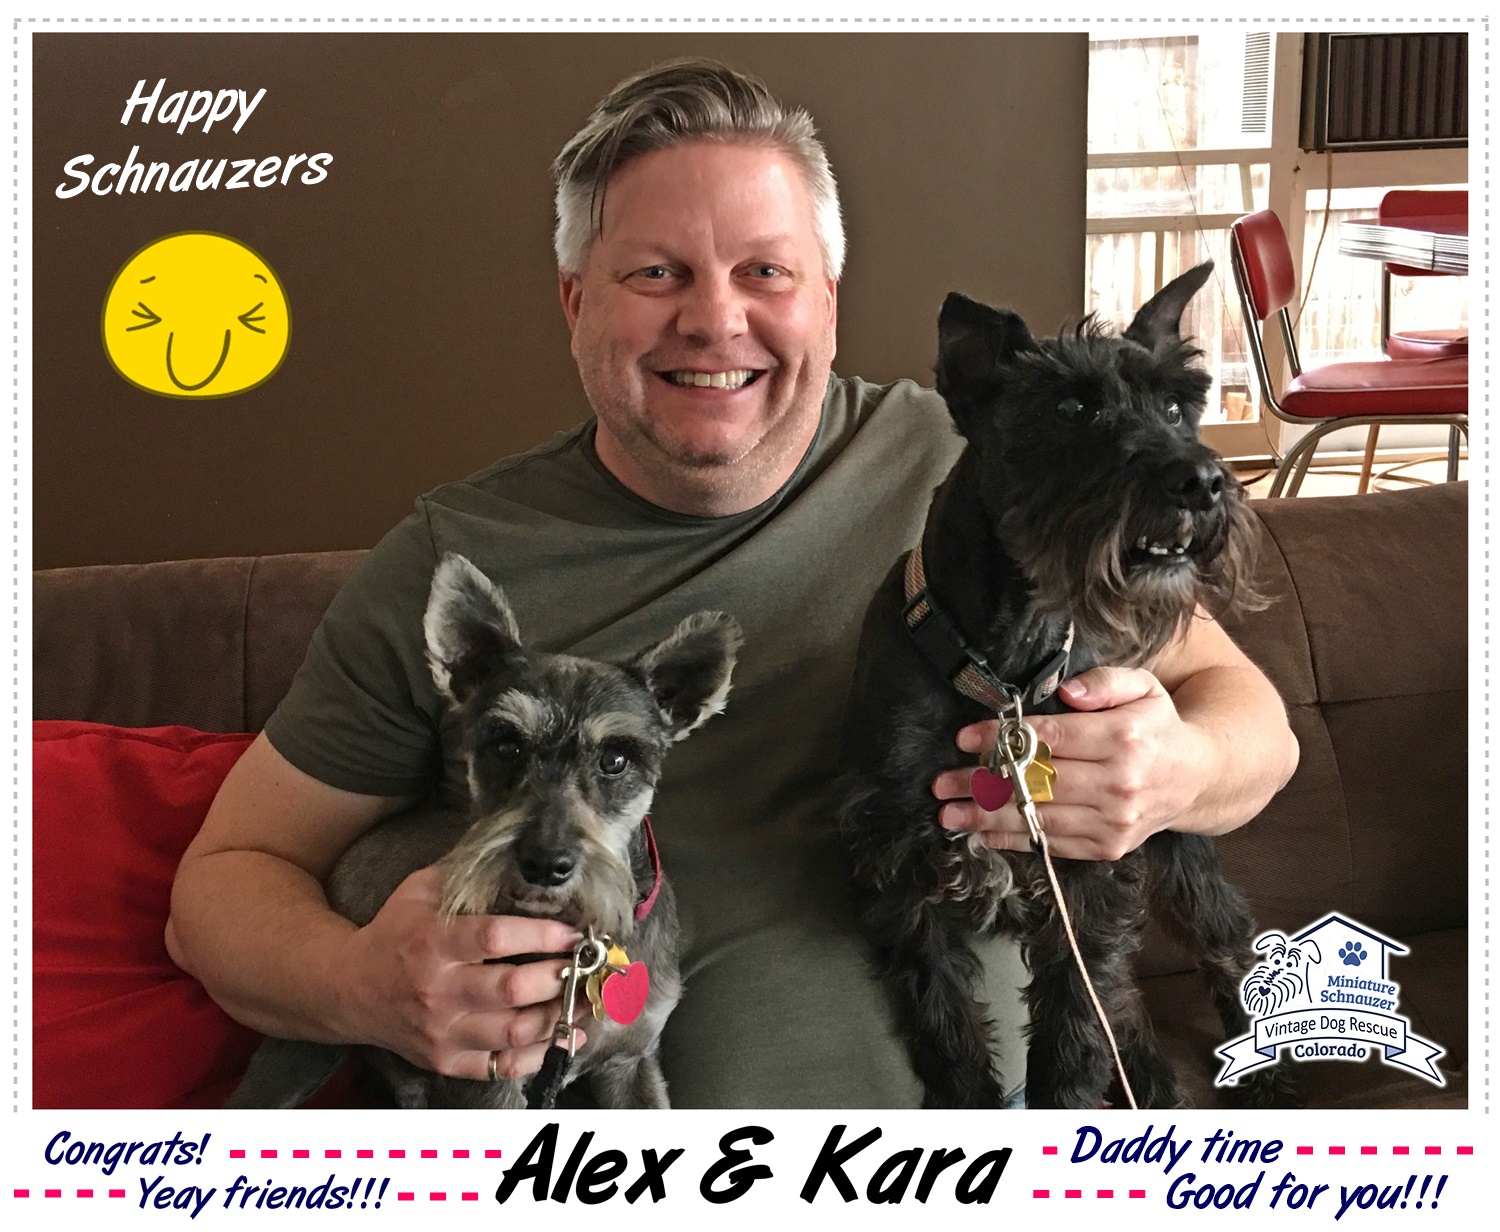 Alex & Kara (Mini Schnauzers) adopted